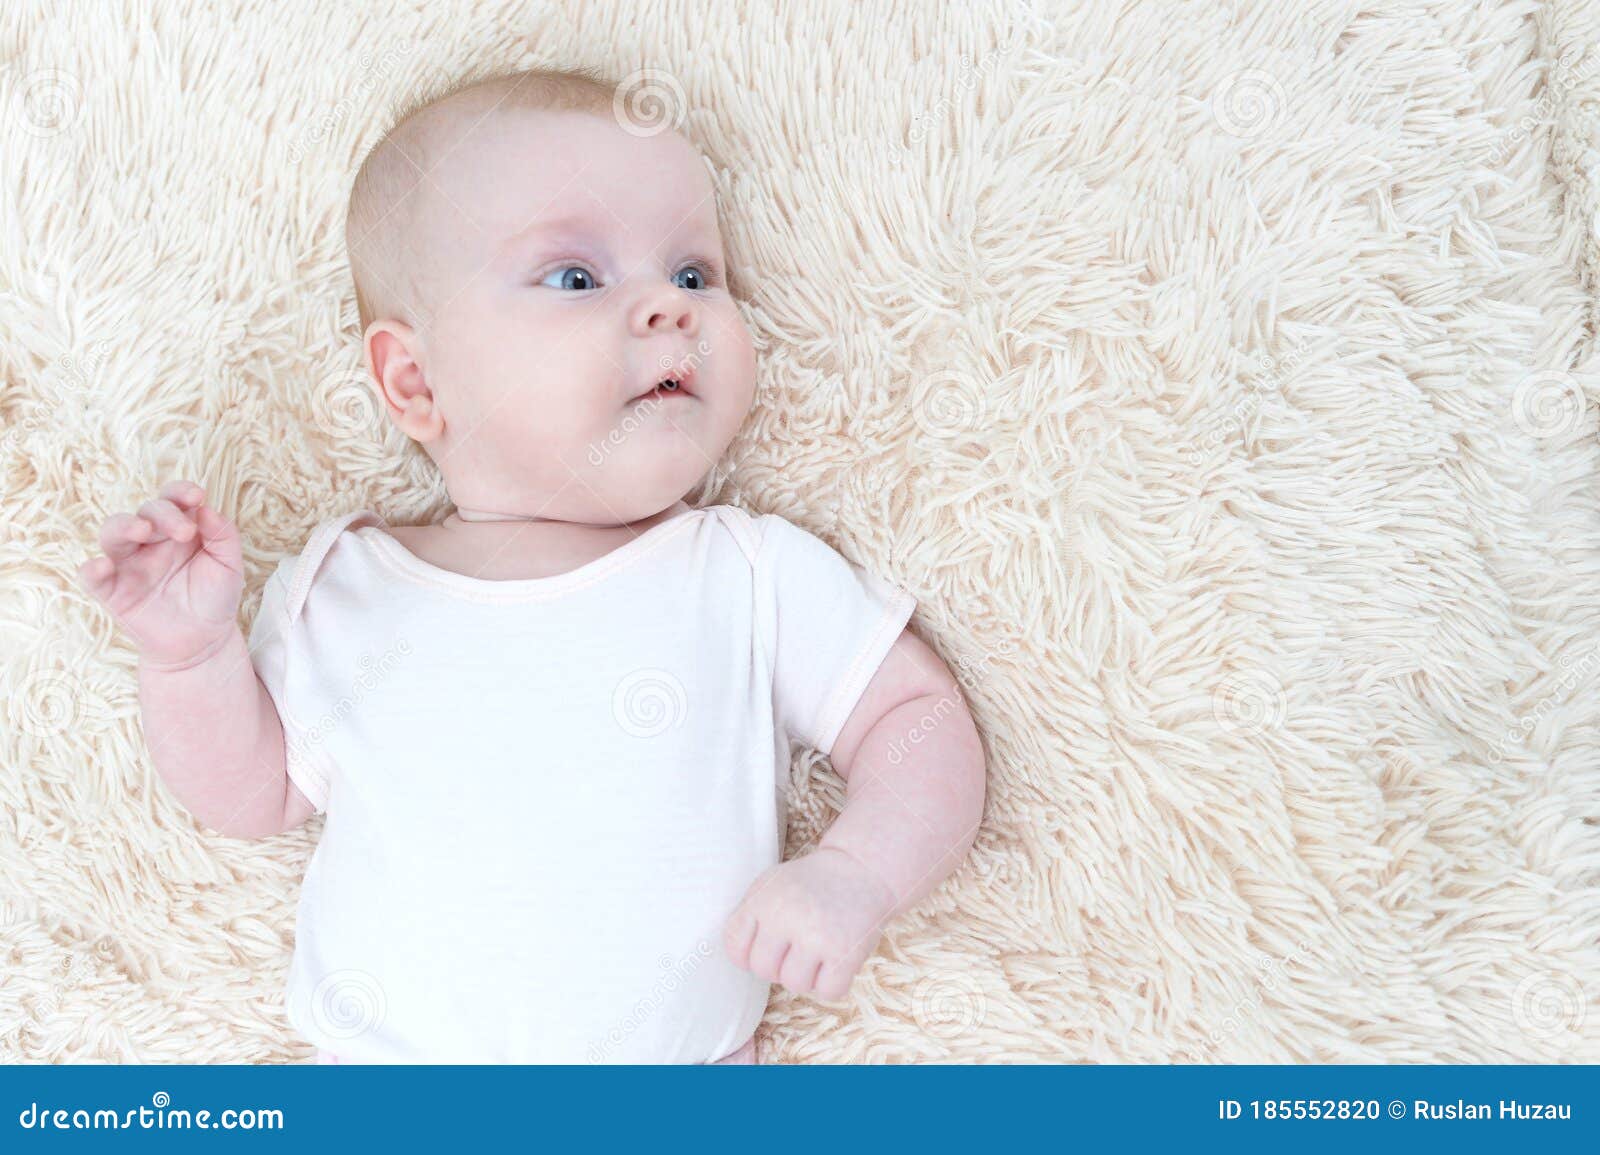 Little Baby Girl Lying on Fluffy Blanket Stock Photo - Image of ...